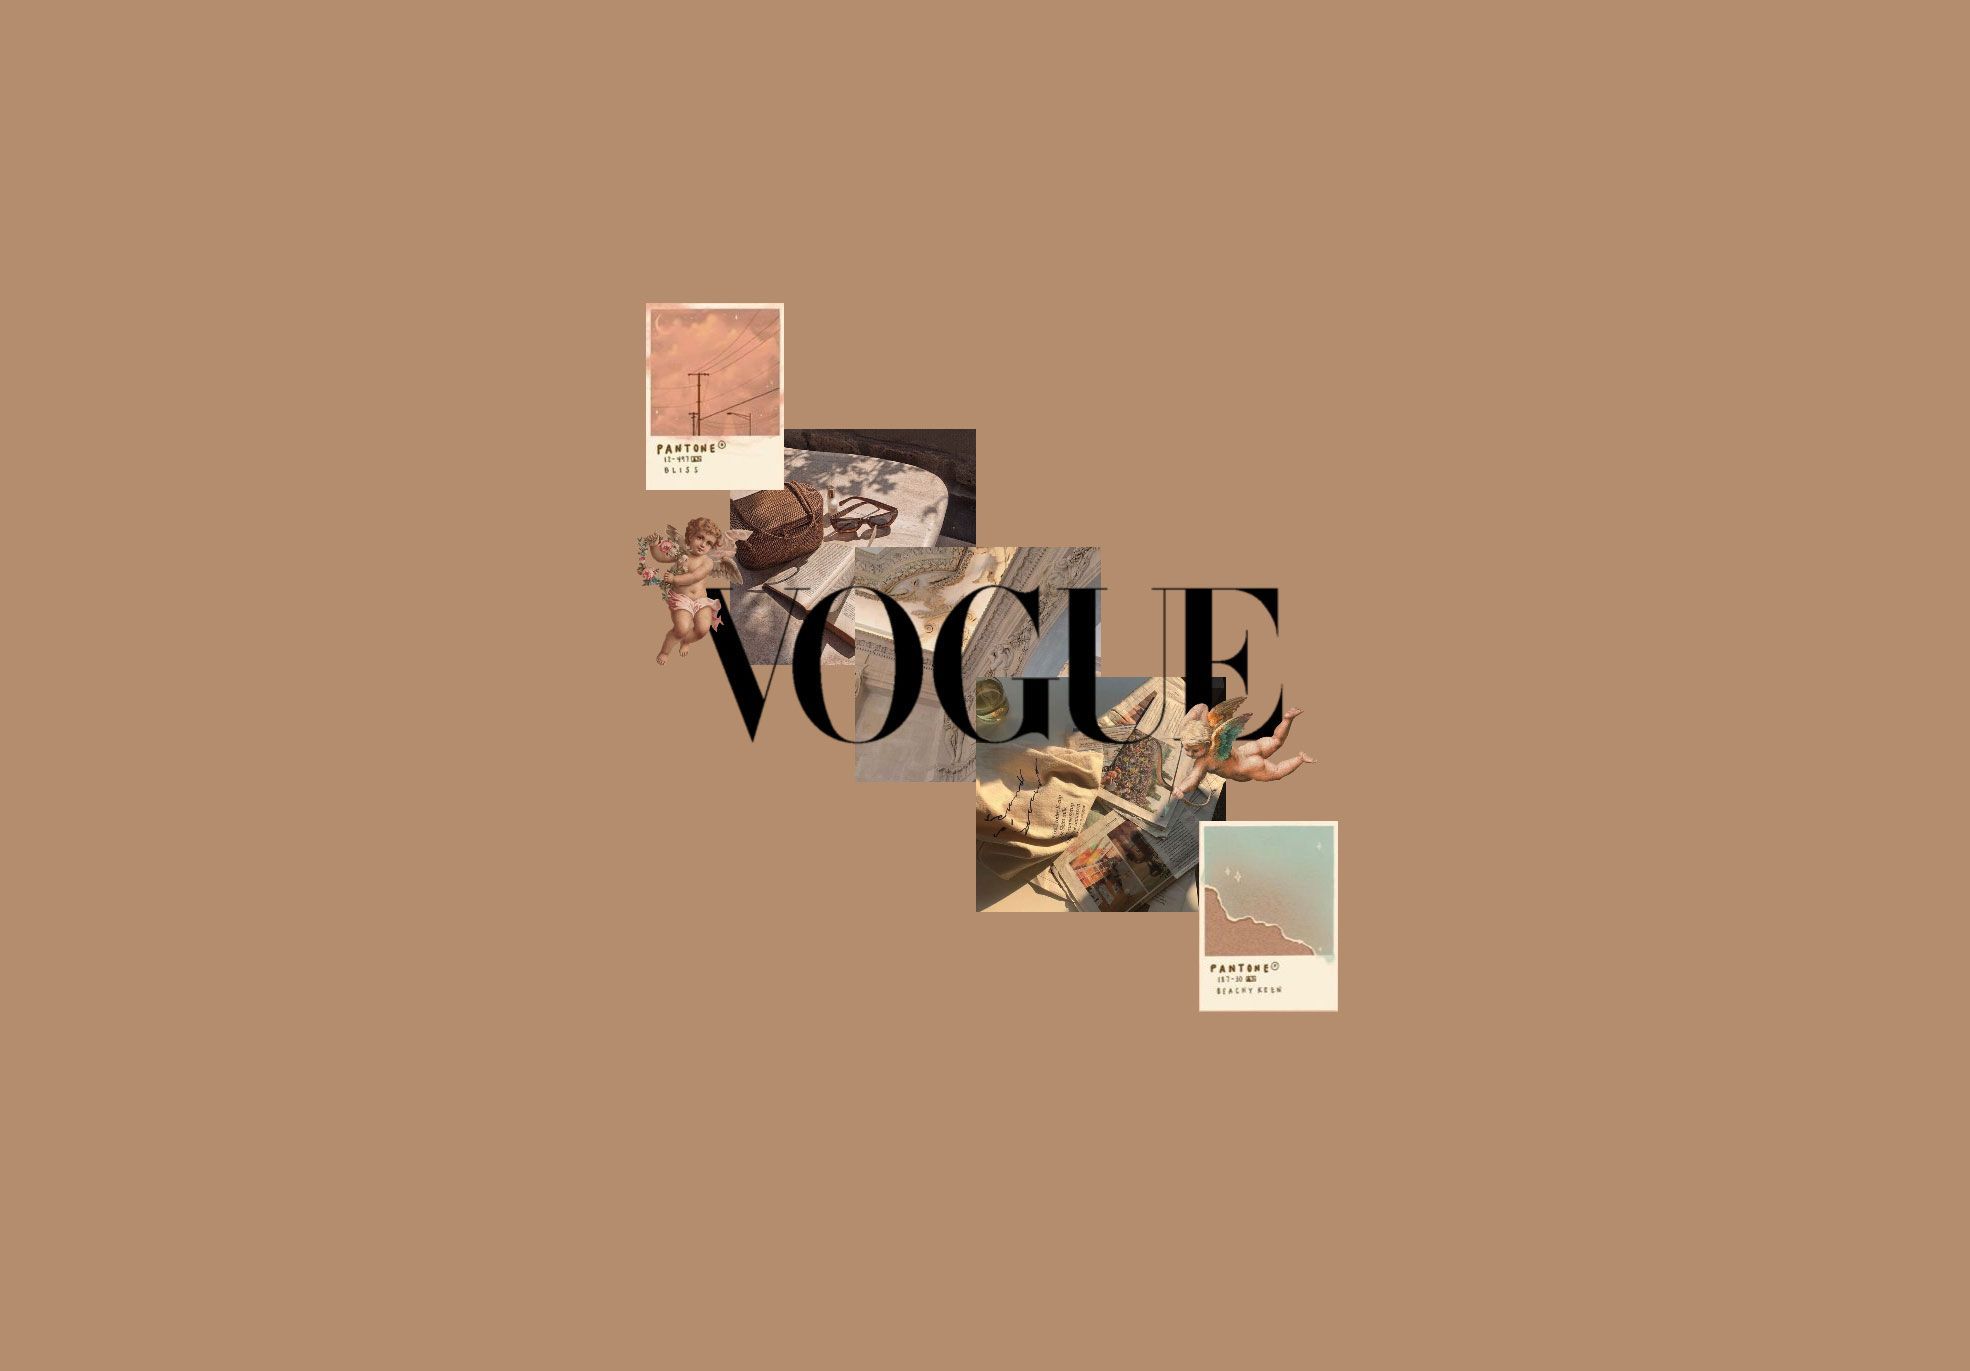 Vogue magazine wallpaper - Laptop, beige, couple, brown, light brown, computer, wedding, June, Vogue